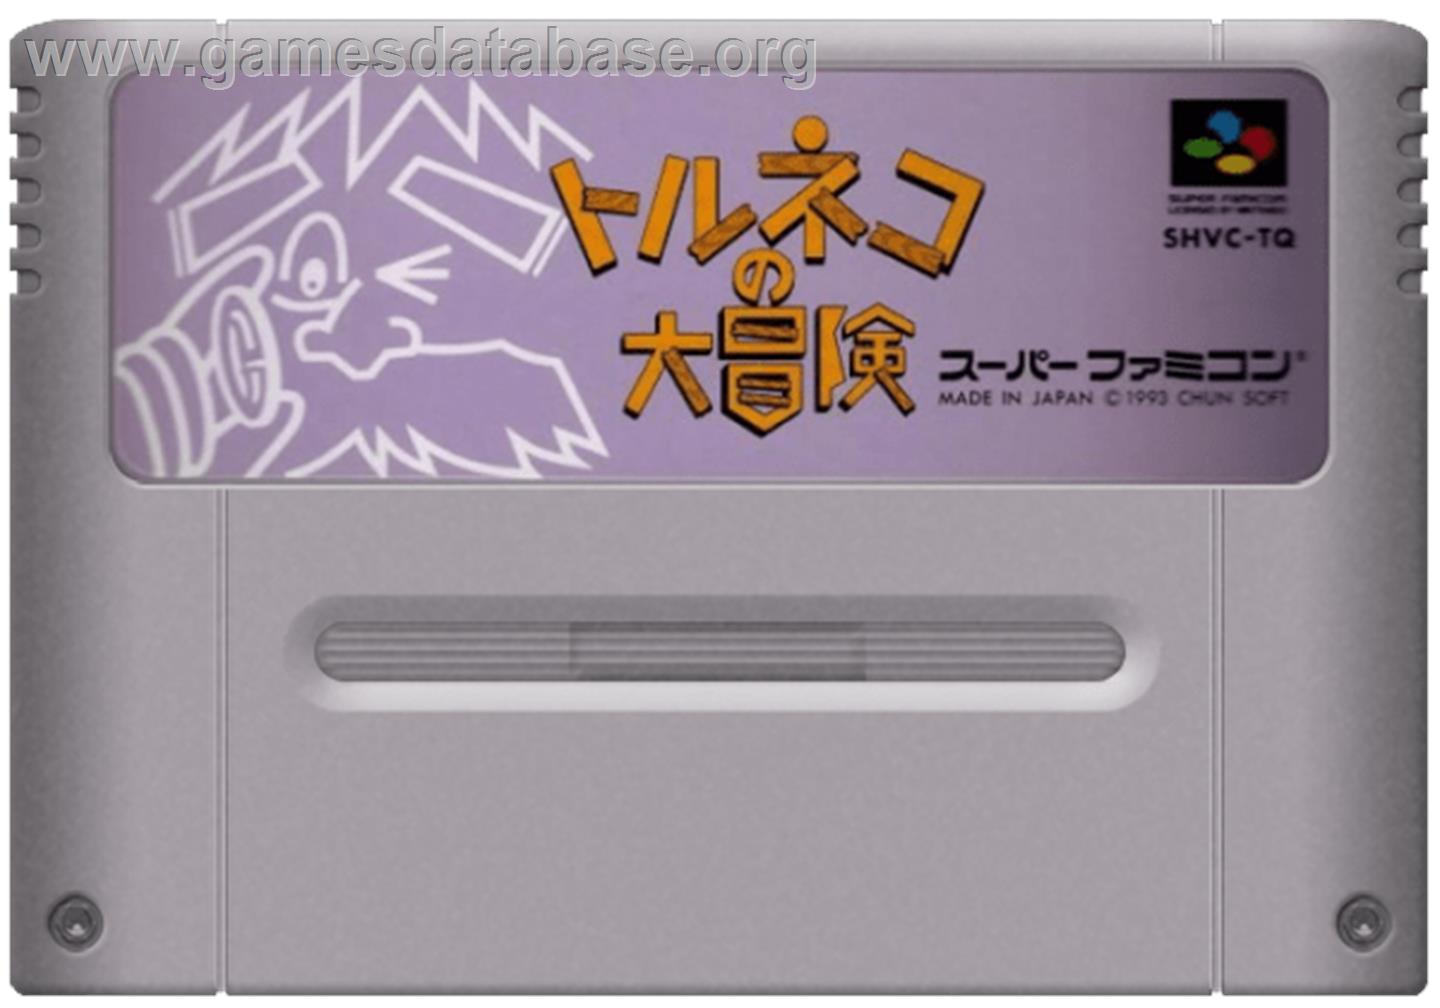 Torneko no Daibouken - Fushigi no Dungeon - Nintendo SNES - Artwork - Cartridge